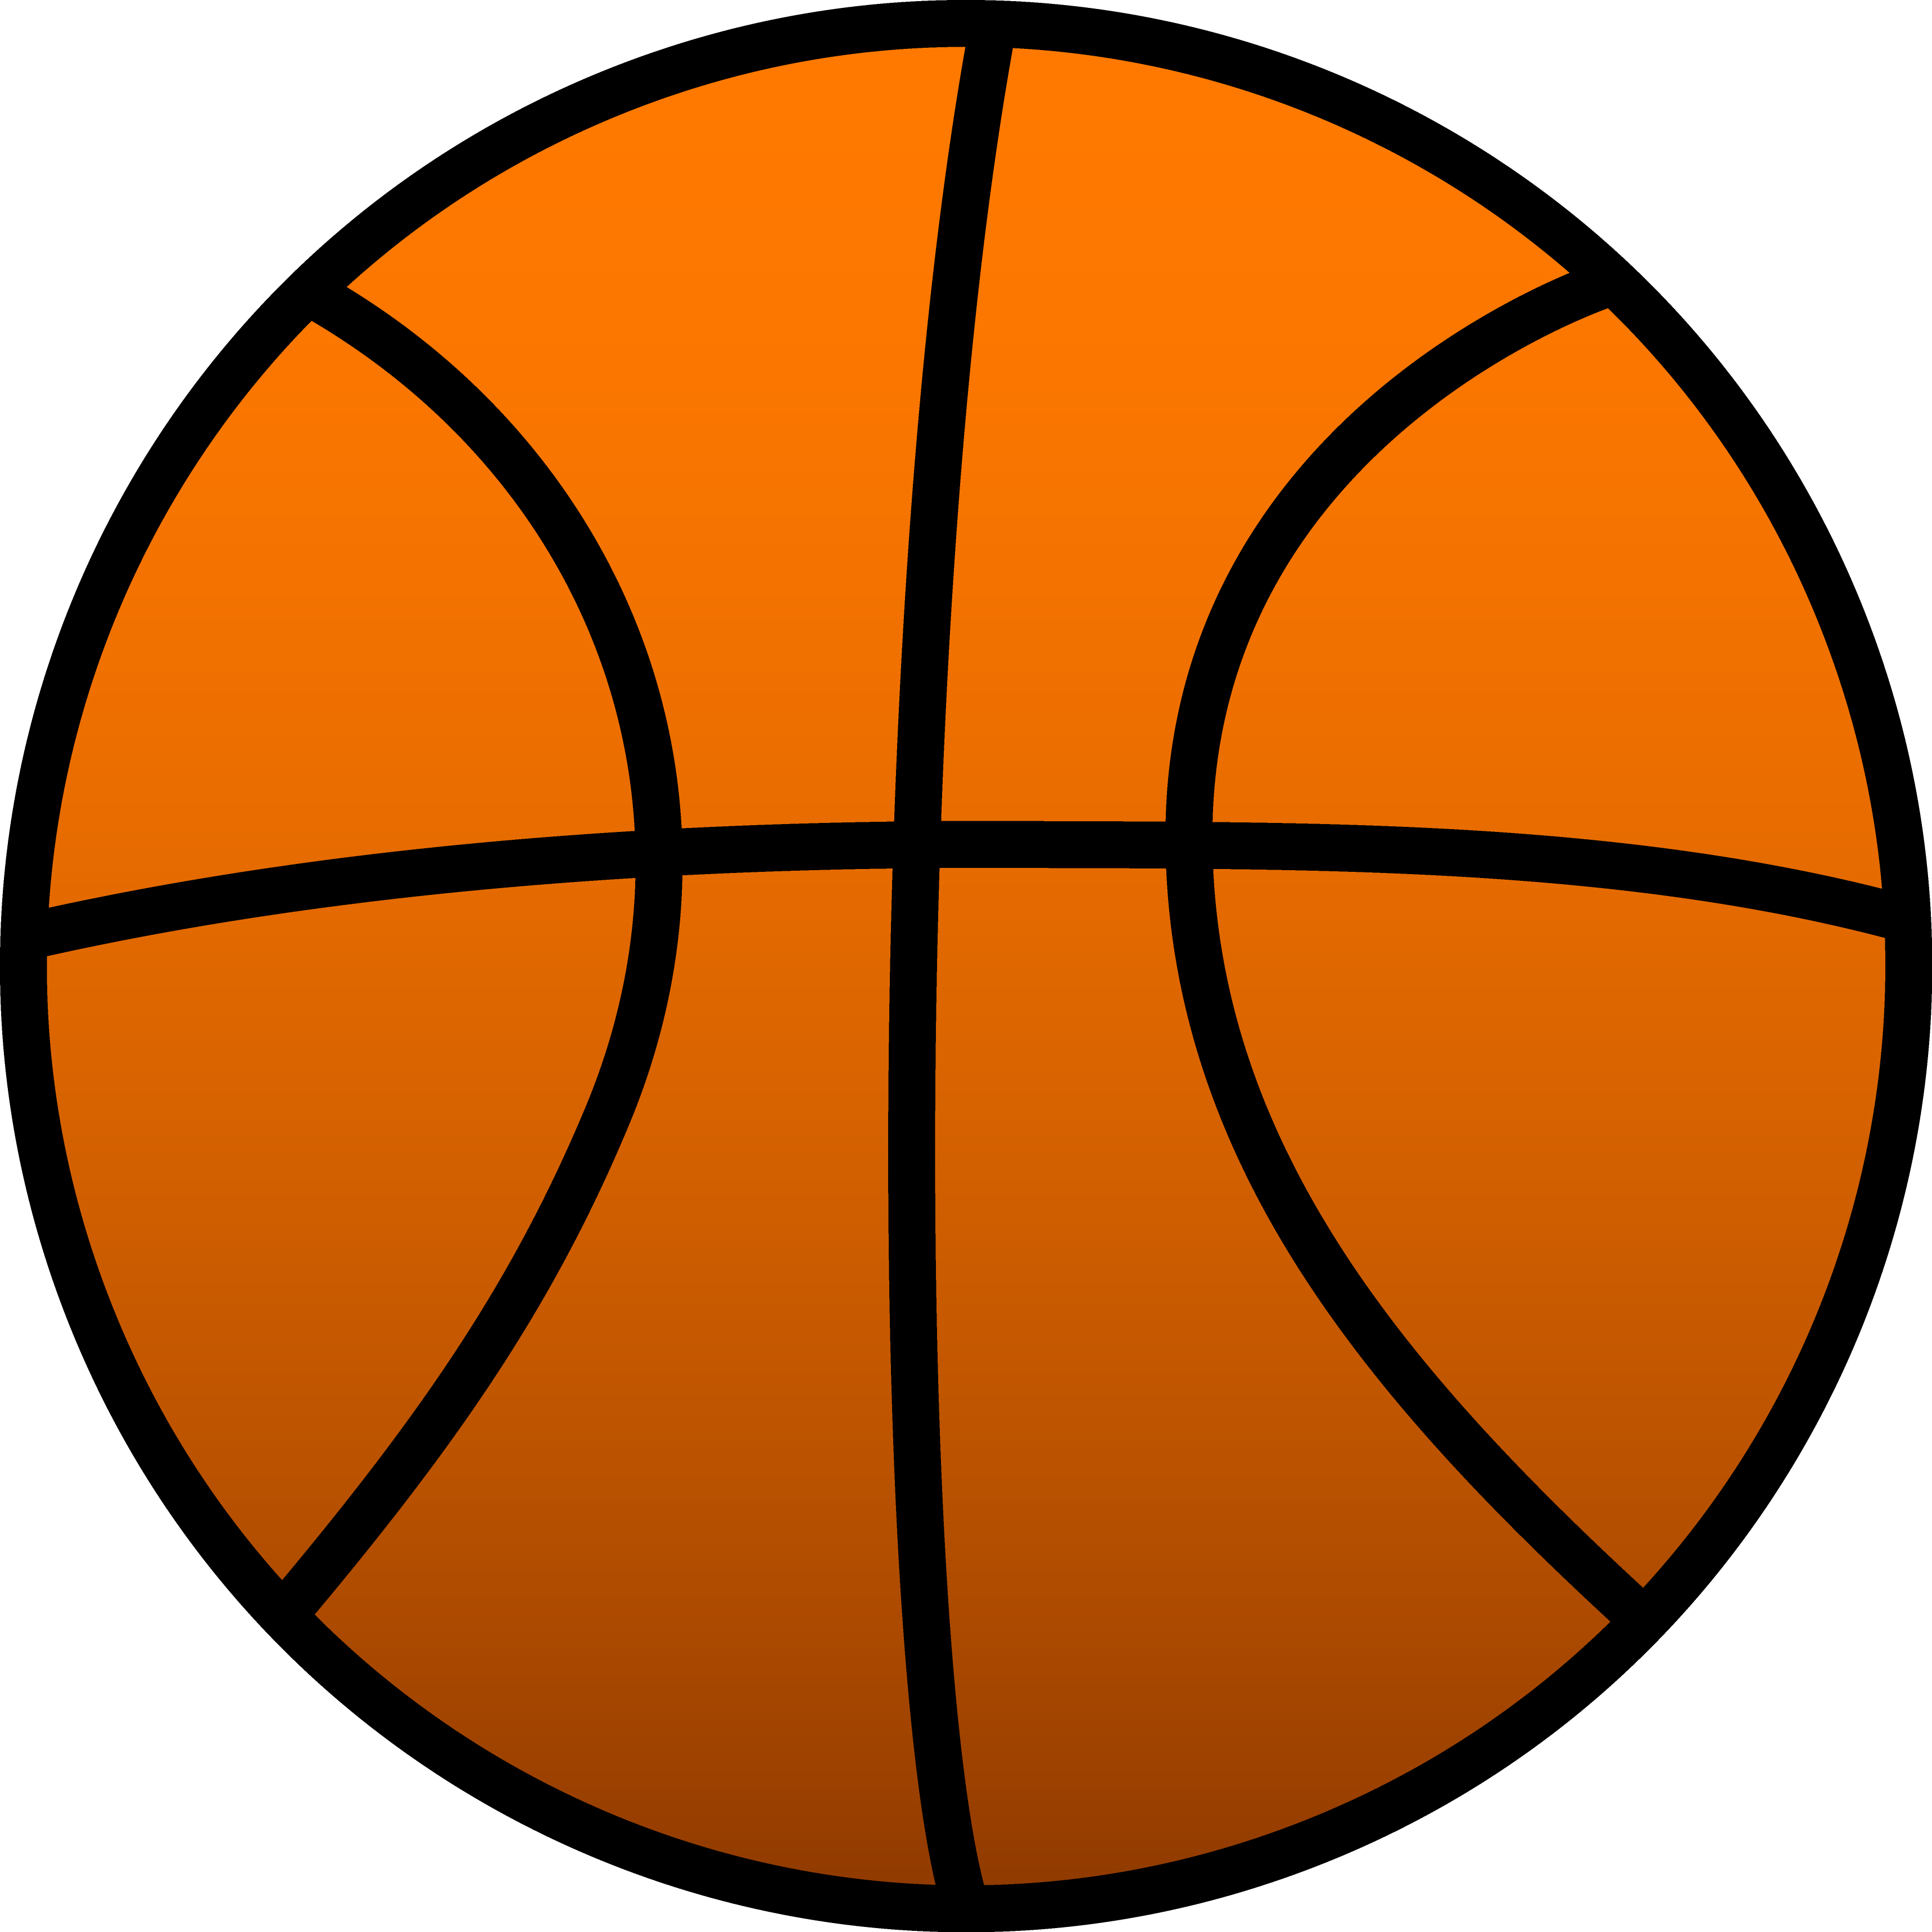 Basketball Png Transparent Basketballpng Images Pluspng